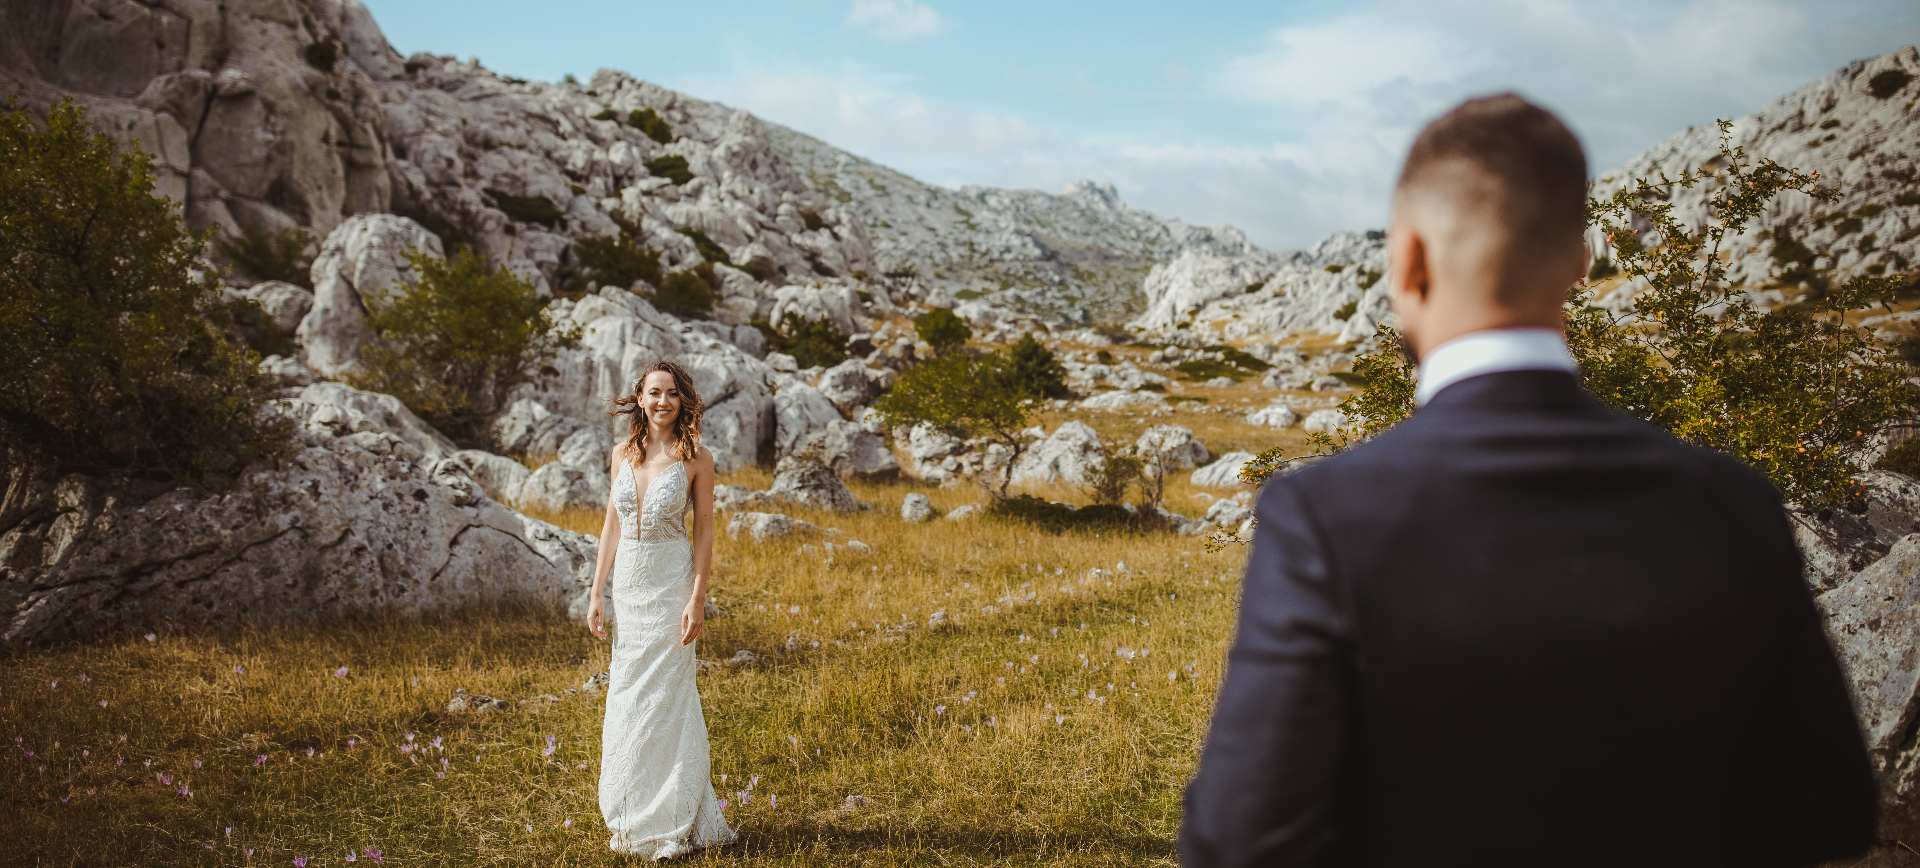 elope to croatia hiking wedding mediterranean